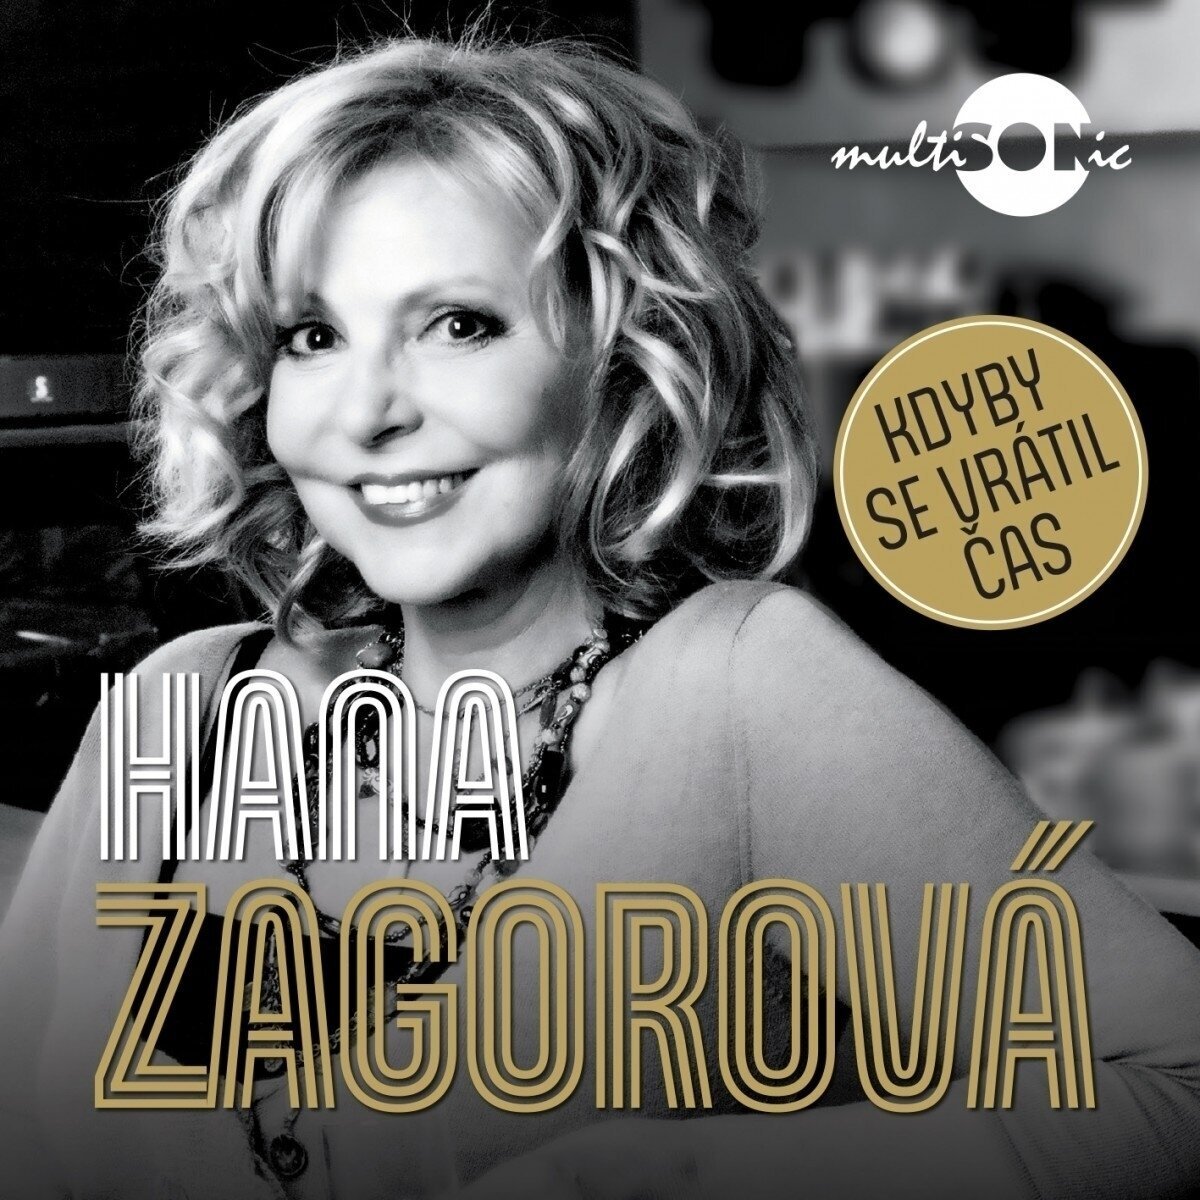 Vinyl Record Hana Zagorová - Kdyby se vrátil čas (LP)